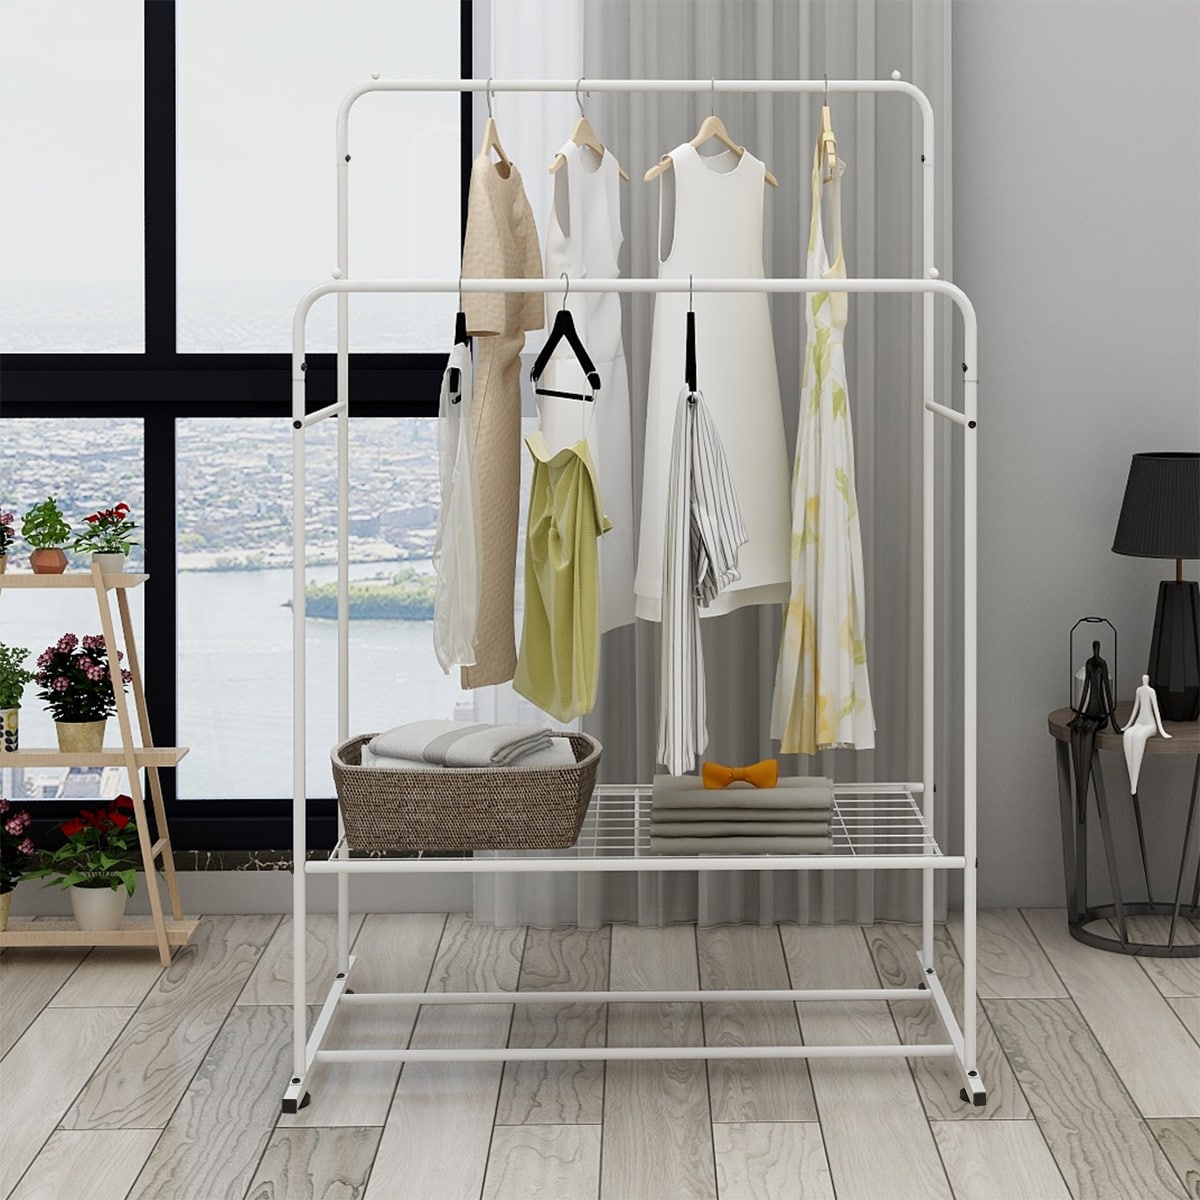 https://ak1.ostkcdn.com/images/products/is/images/direct/879d6eb3e0791a8f6ed94601dbe13d5145c338de/White-Metal-Free-Standing-Closet-Organizer-Double-Hanging-Rod-Clothes-Garment-Racks.jpg